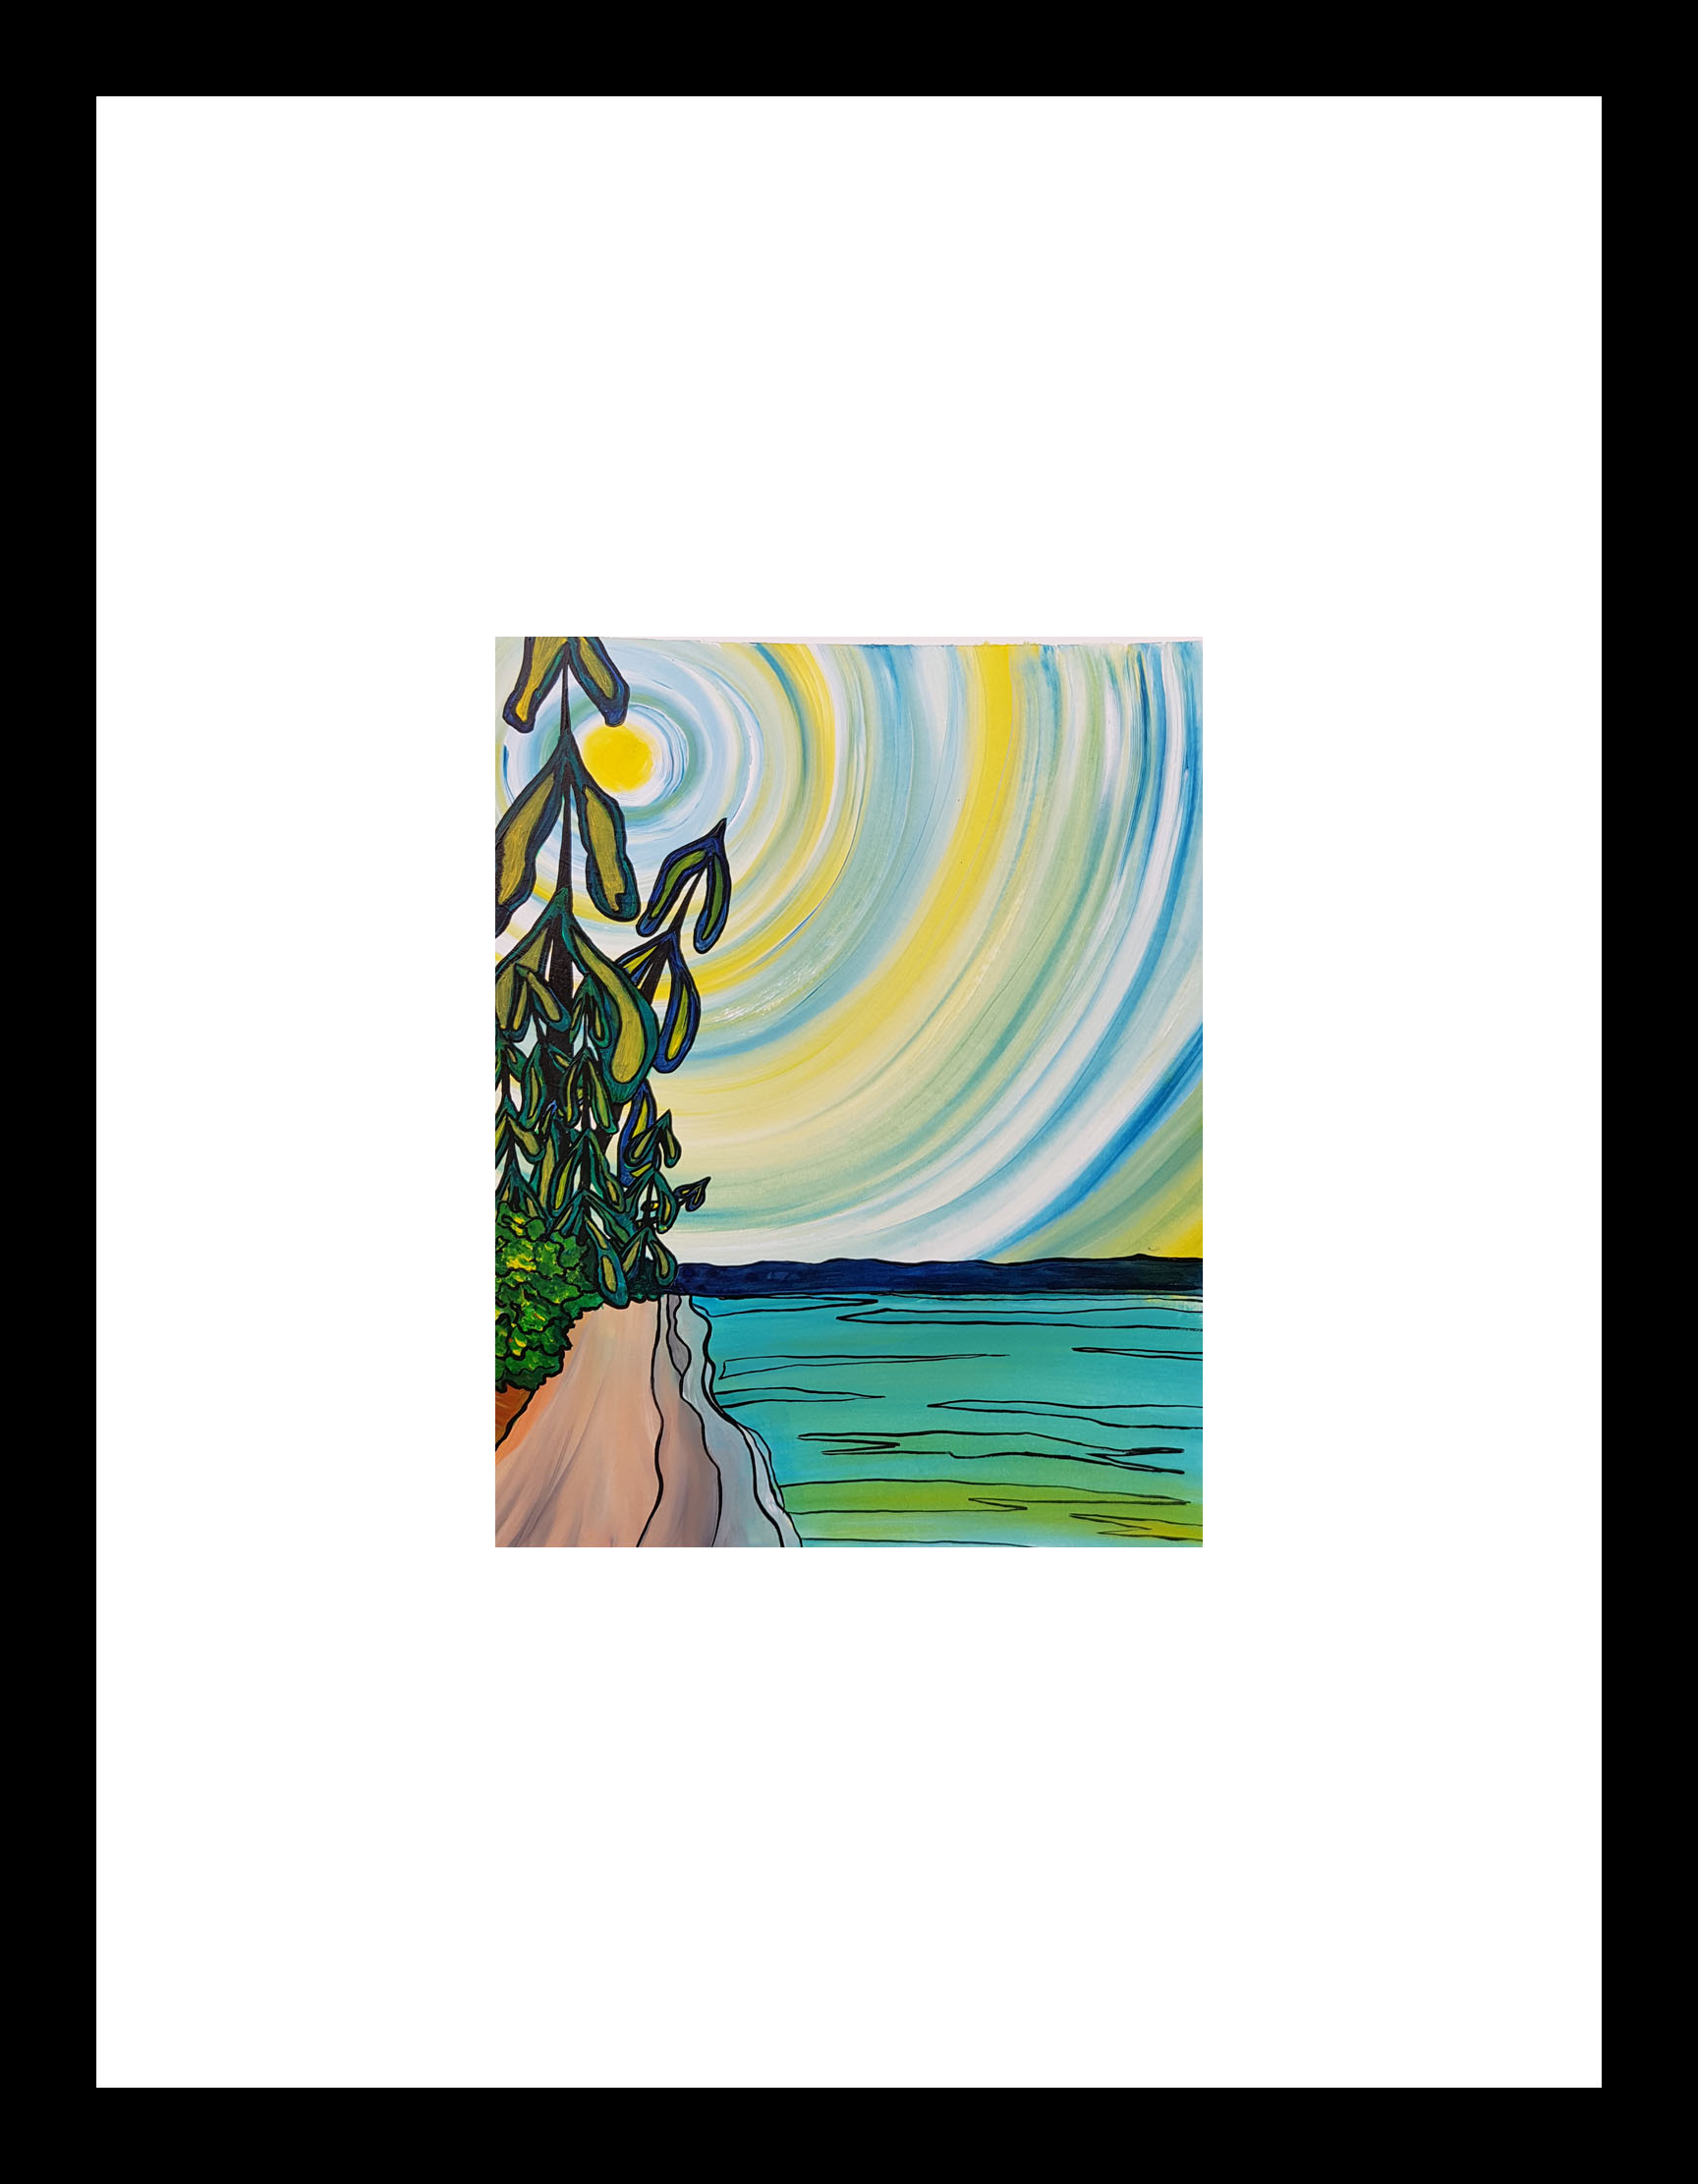 "Waskesiu Beach" [2018]
Image: 10.25" x 13.25"
Framed: 22" x 18"
Acrylic on 246 lb. paper
SOLD